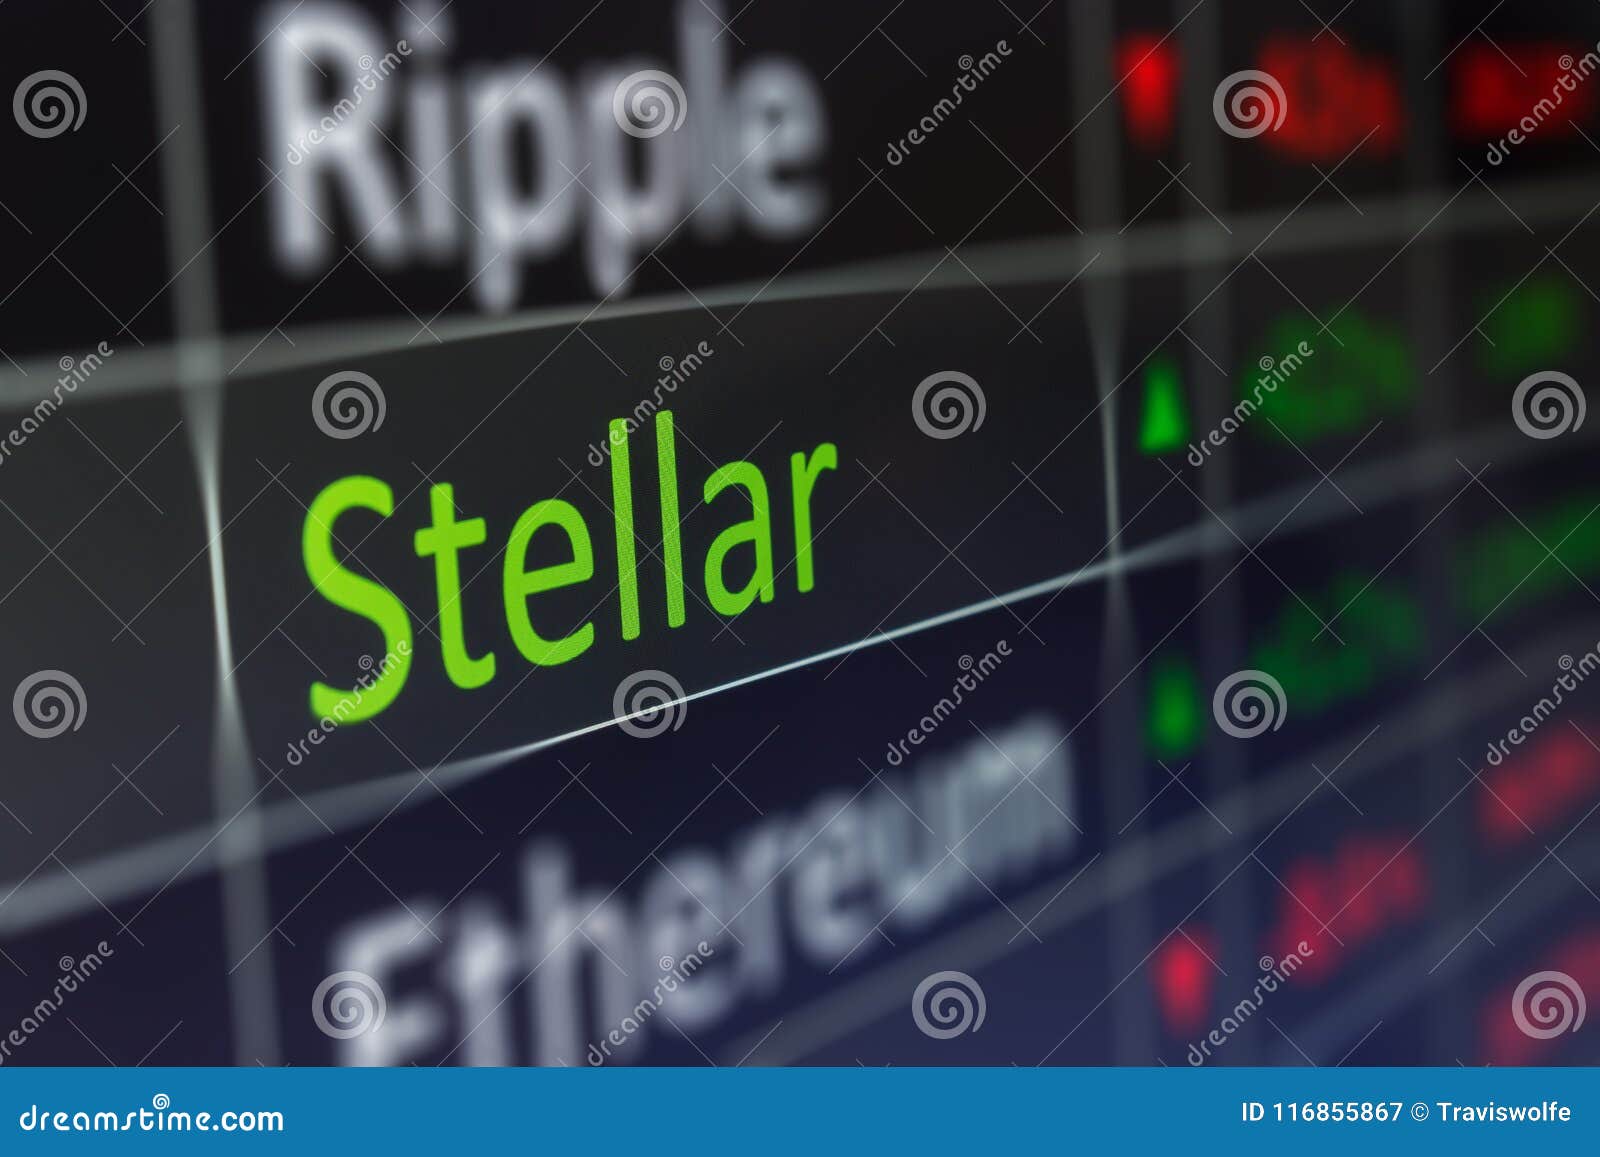 stellar crypto buy or sell